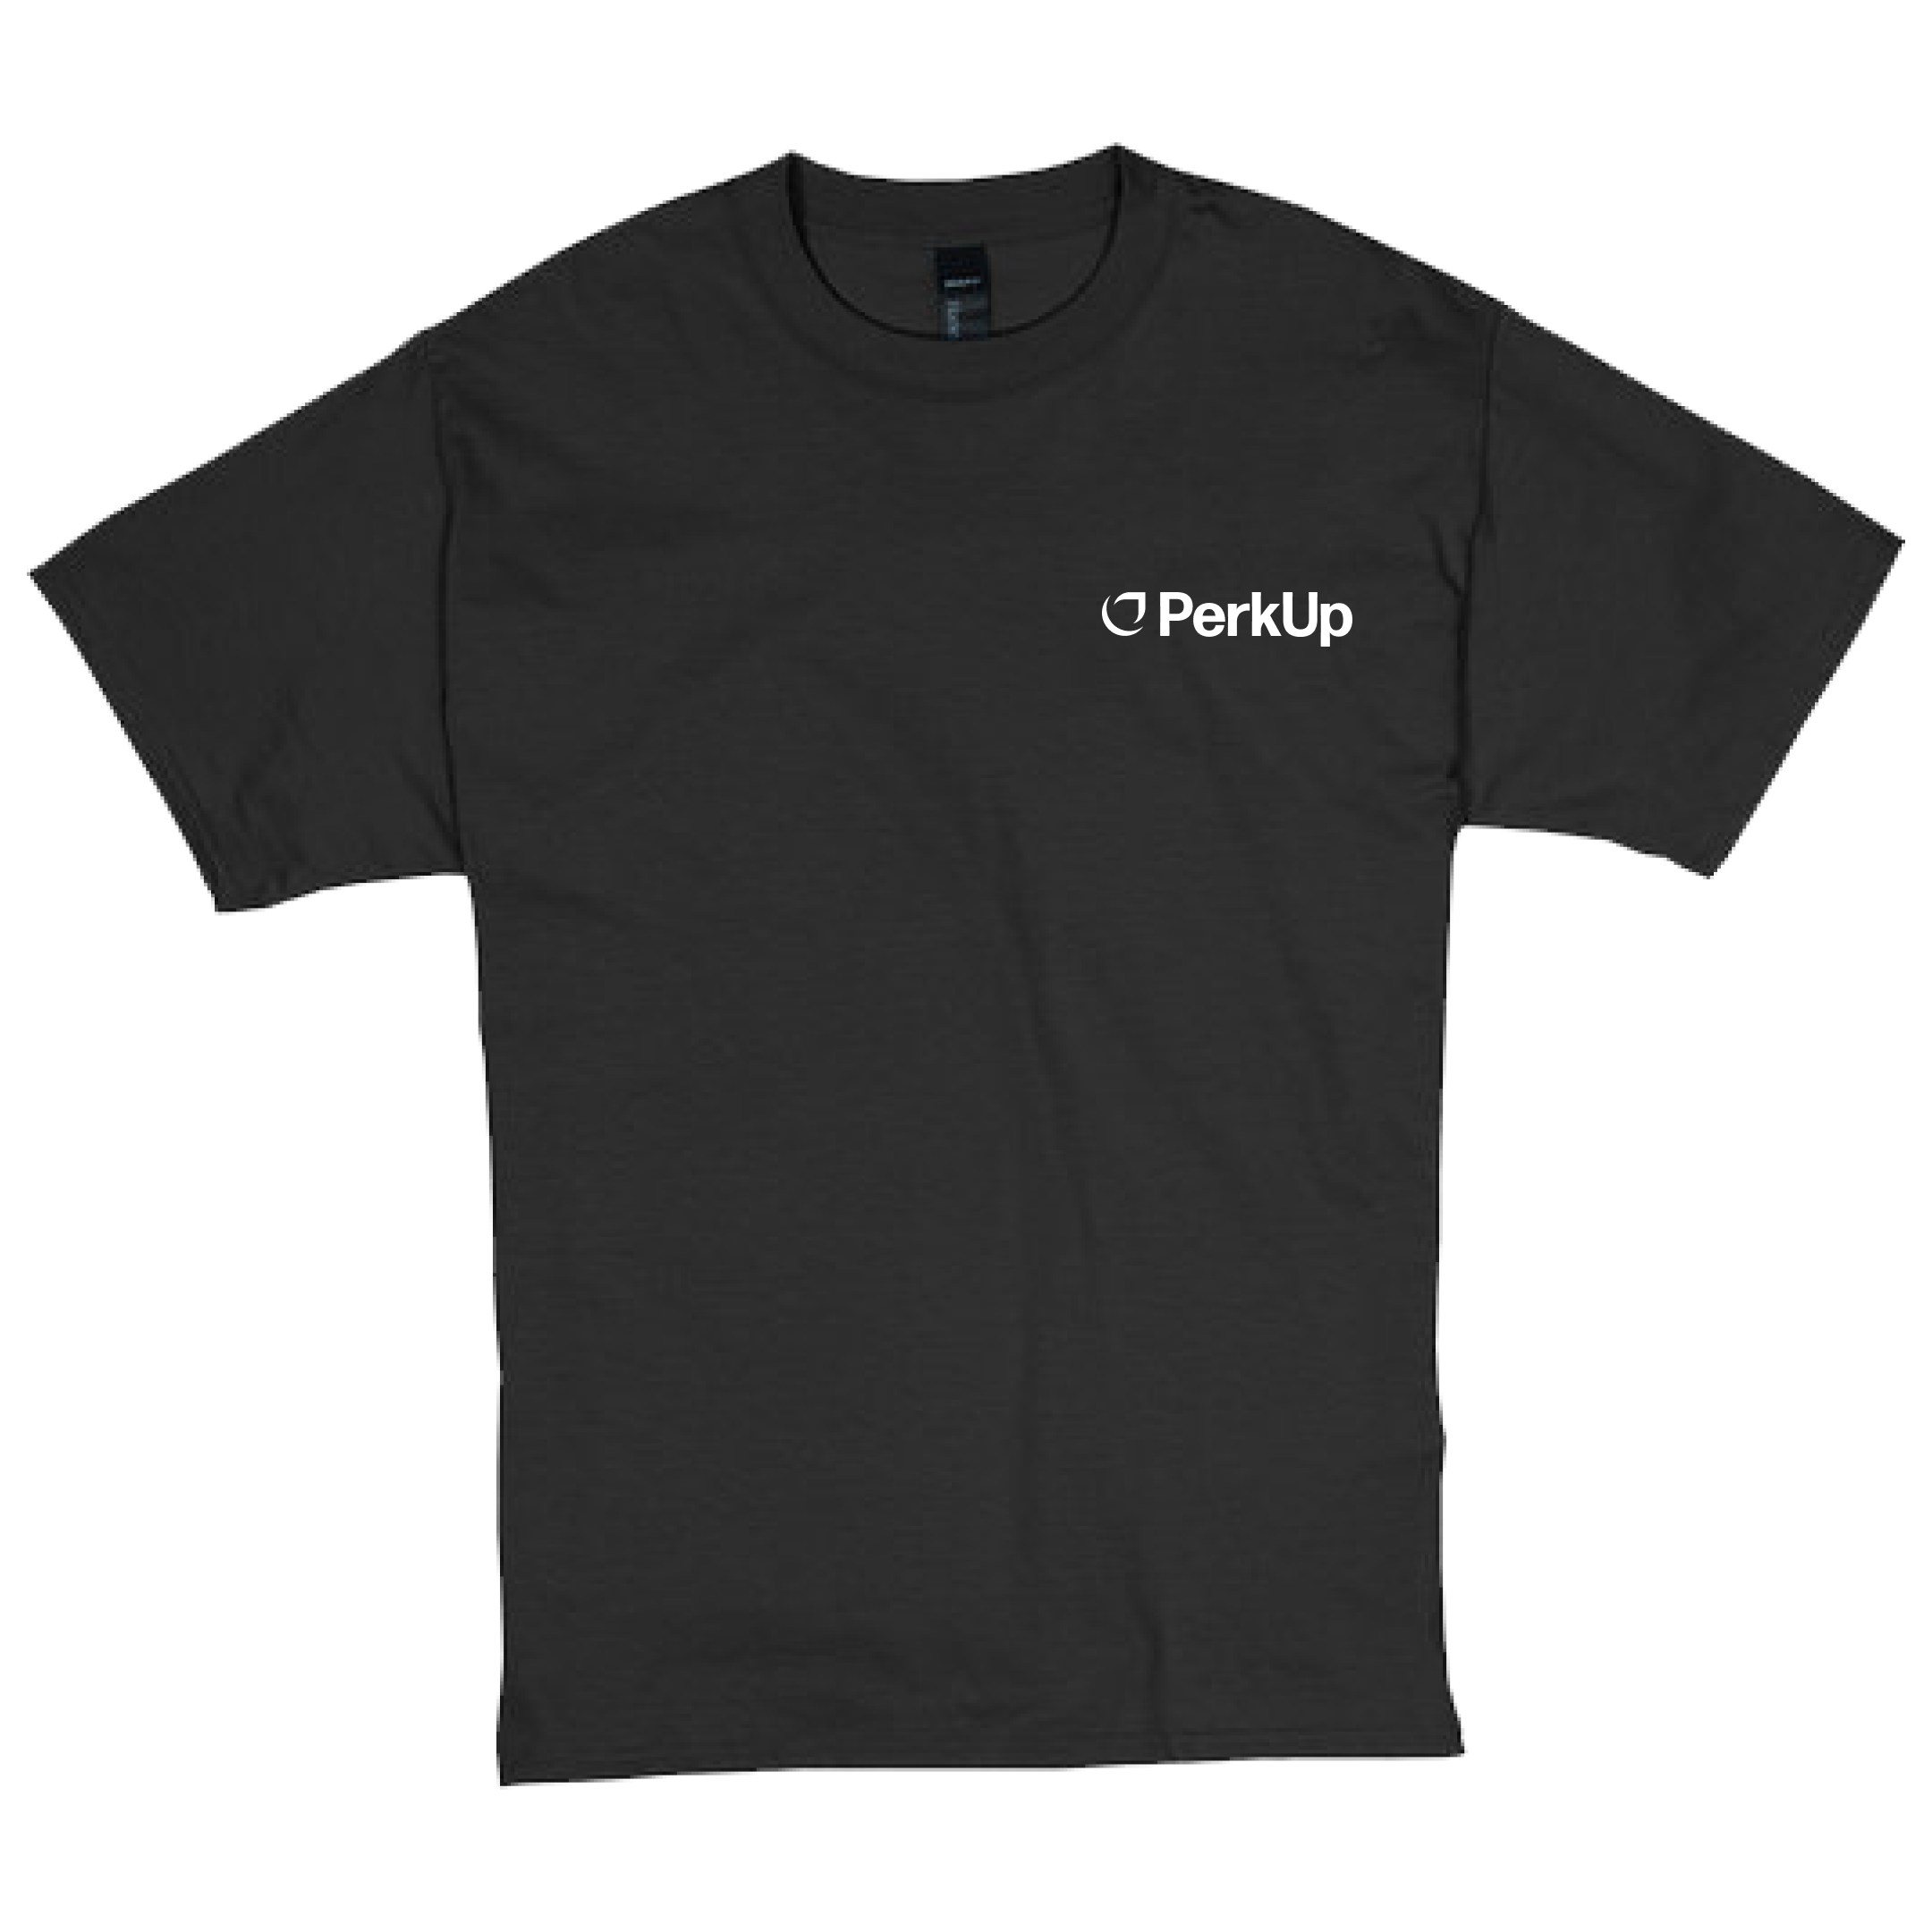 Hanes Unisex Beefy-T T-Shirt